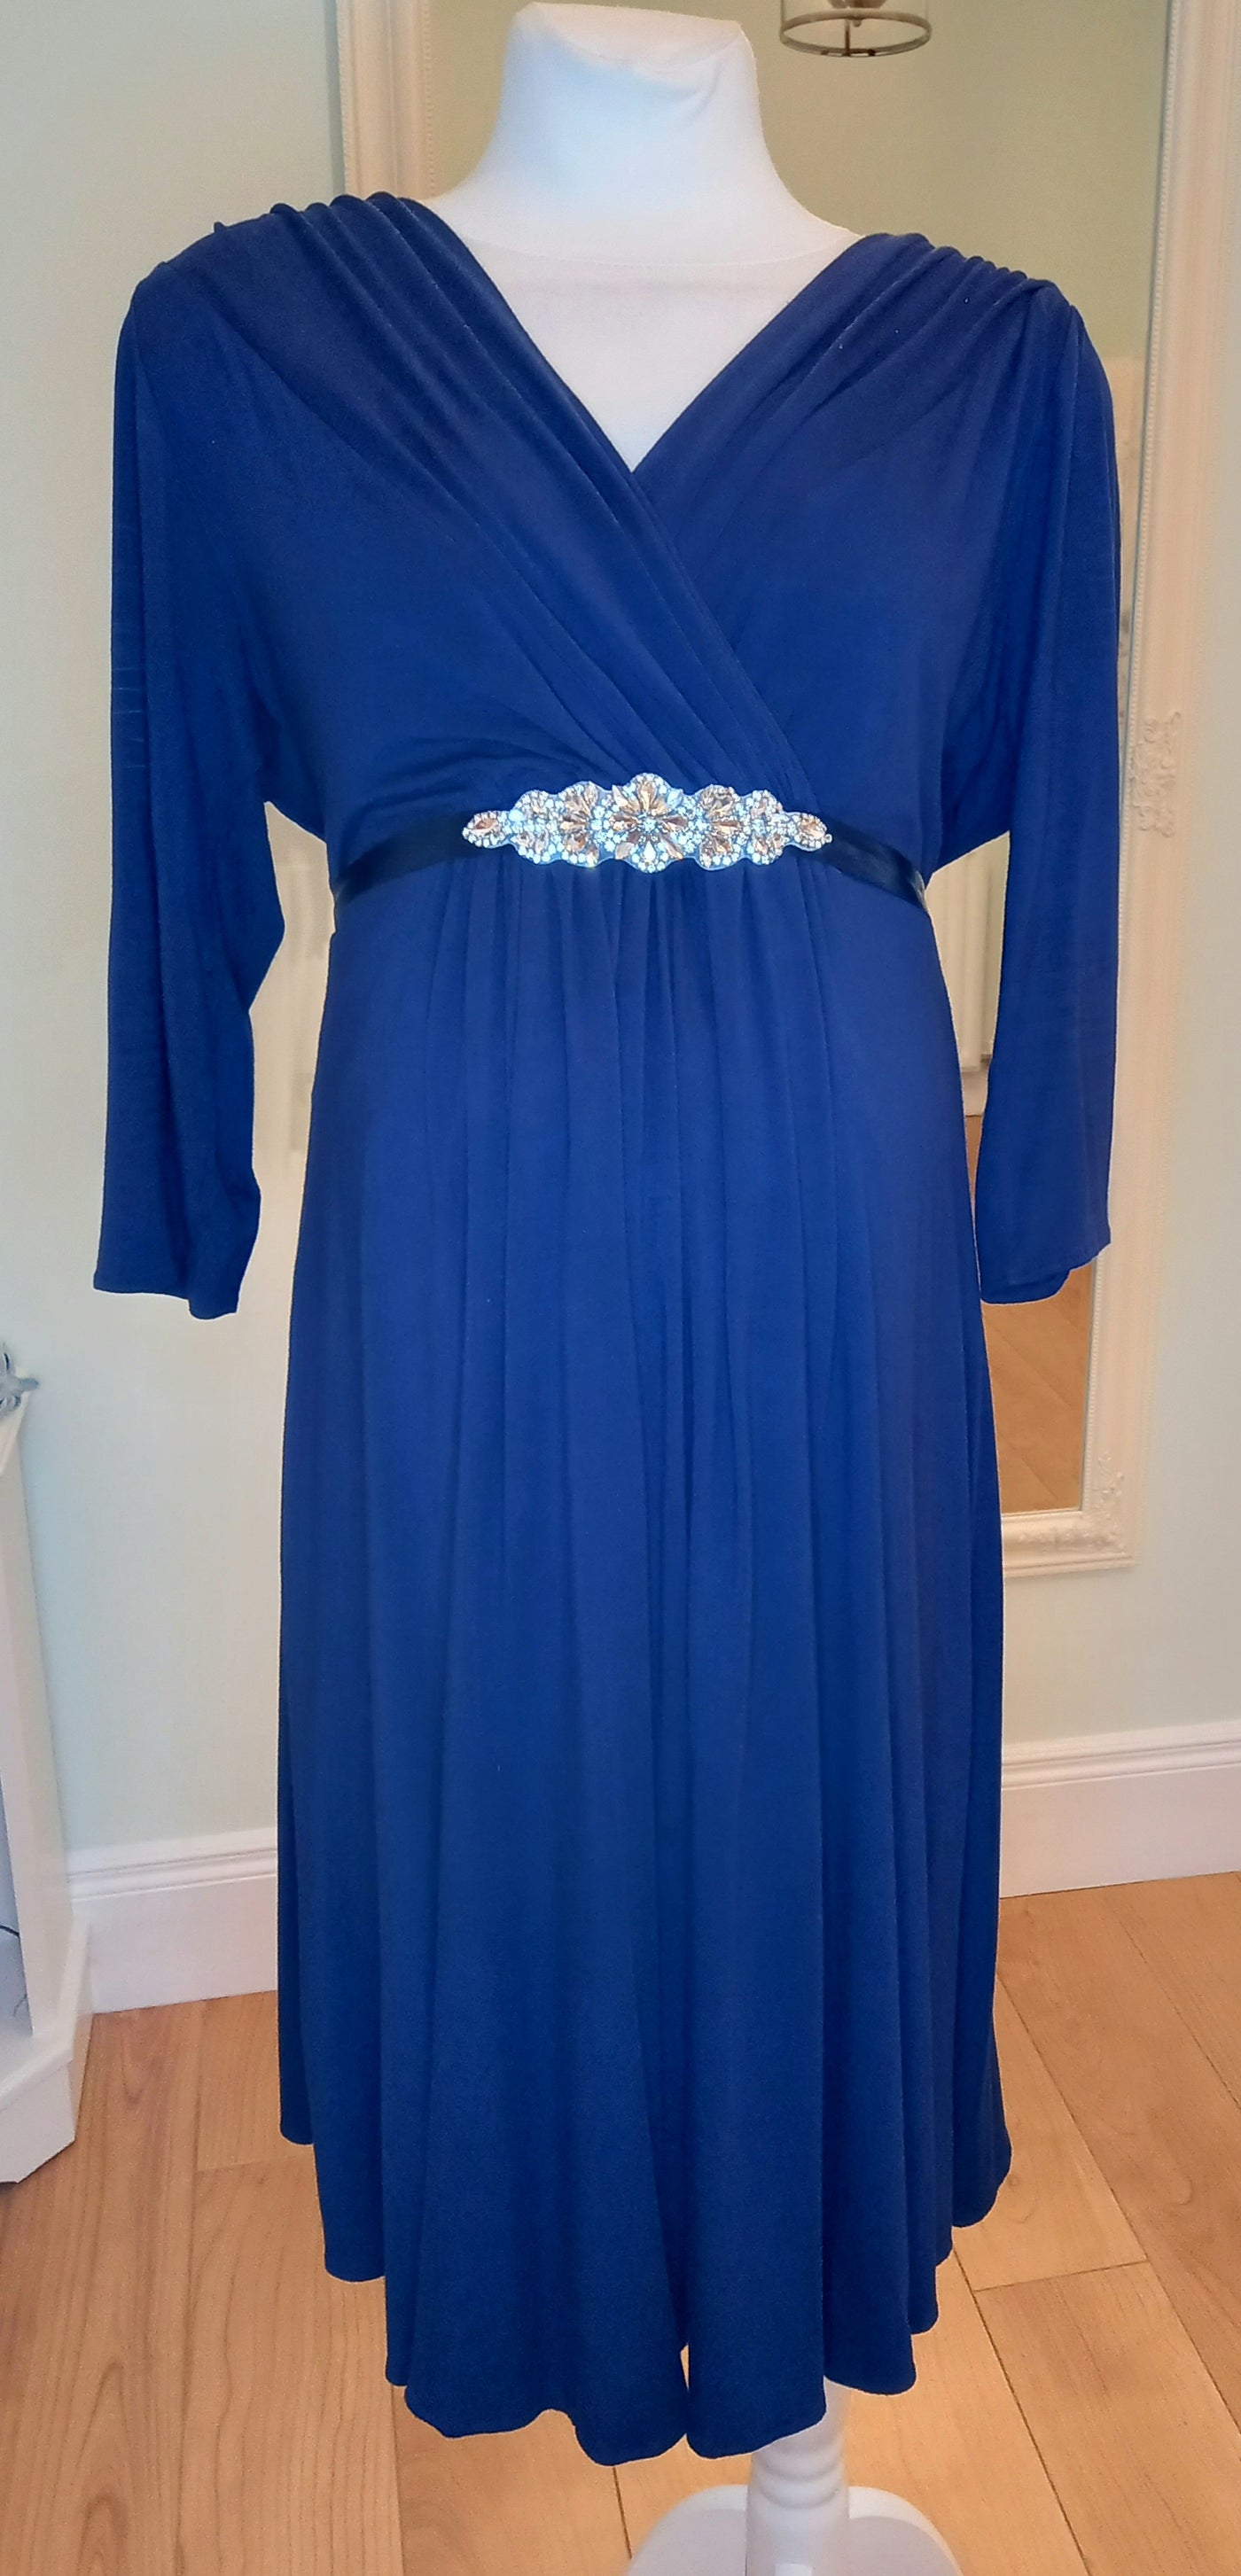 Tiffany Rose Navy Willow Dress - Size 5 (UK 16/18)